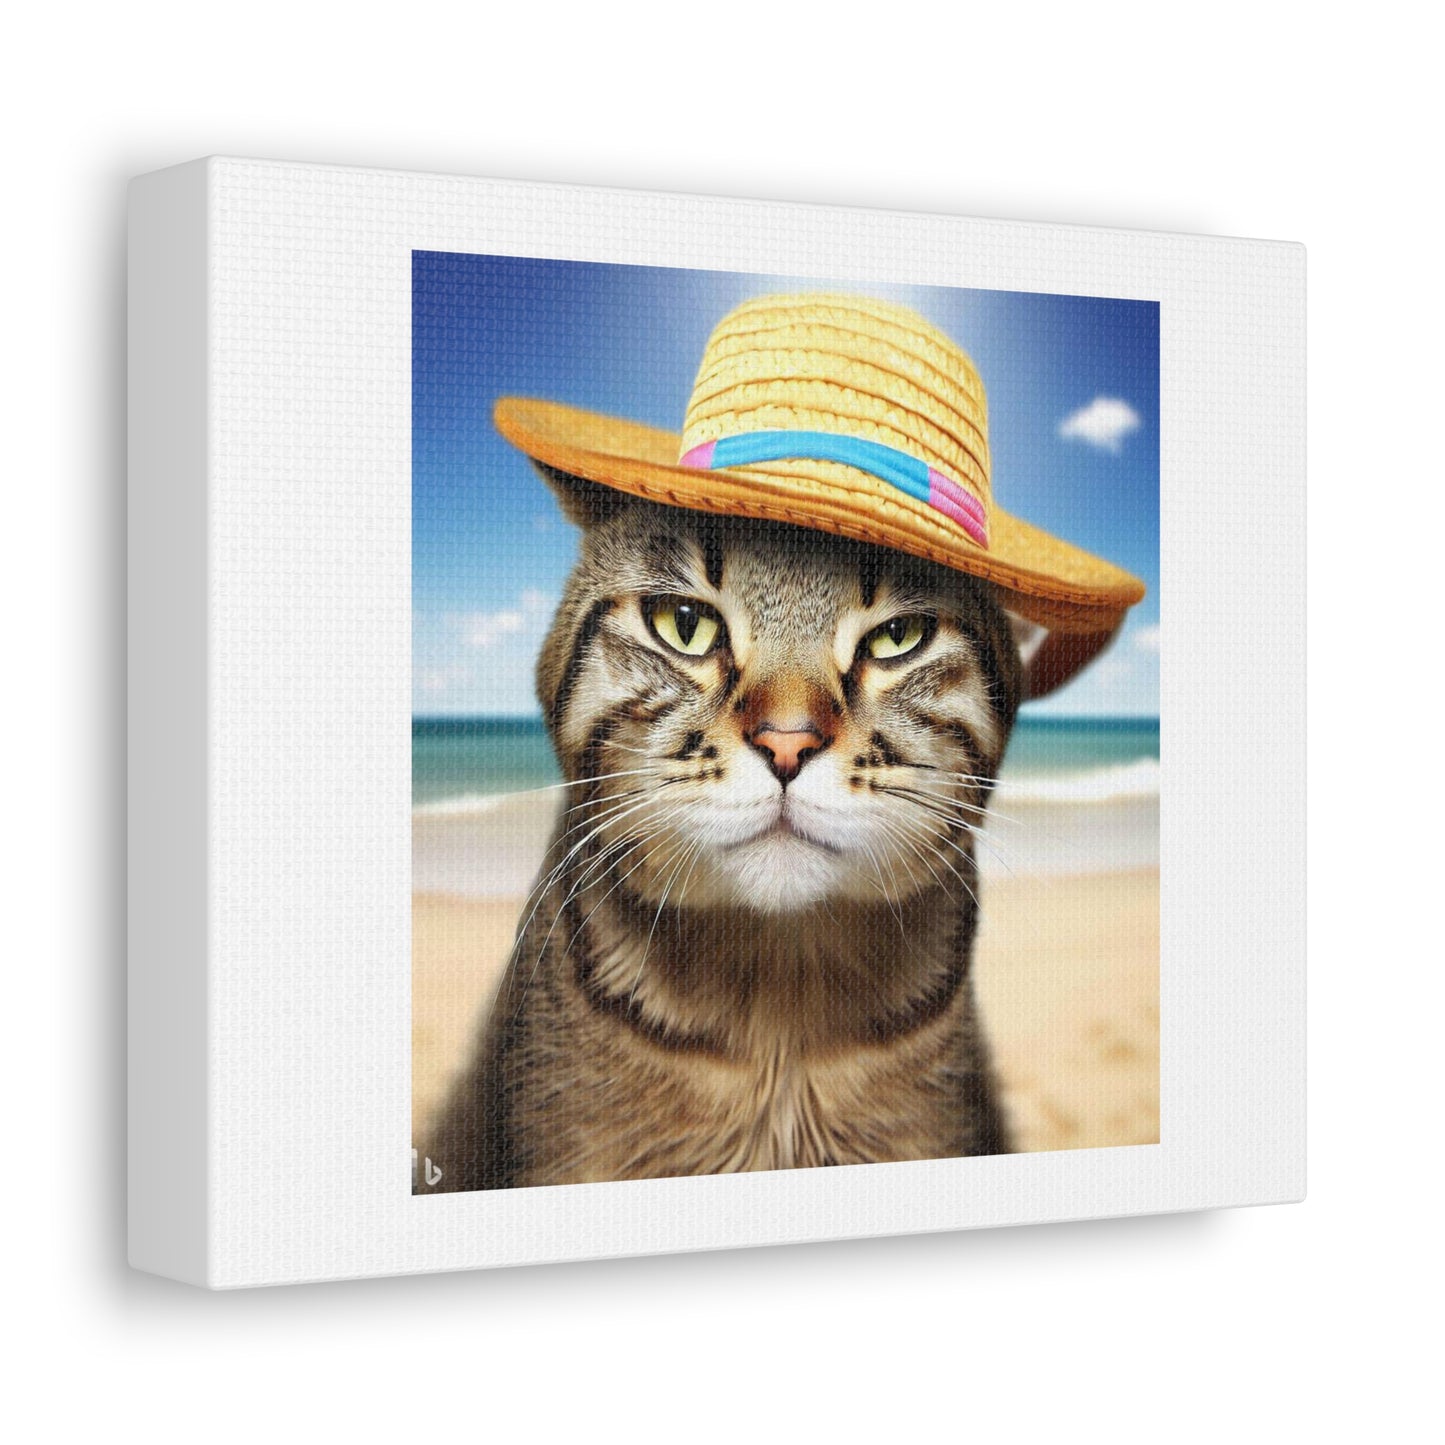 Tabby Cat Getting a Sun Tan, Beach, Funny Hat digital art 'Designed by AI' on Canvas